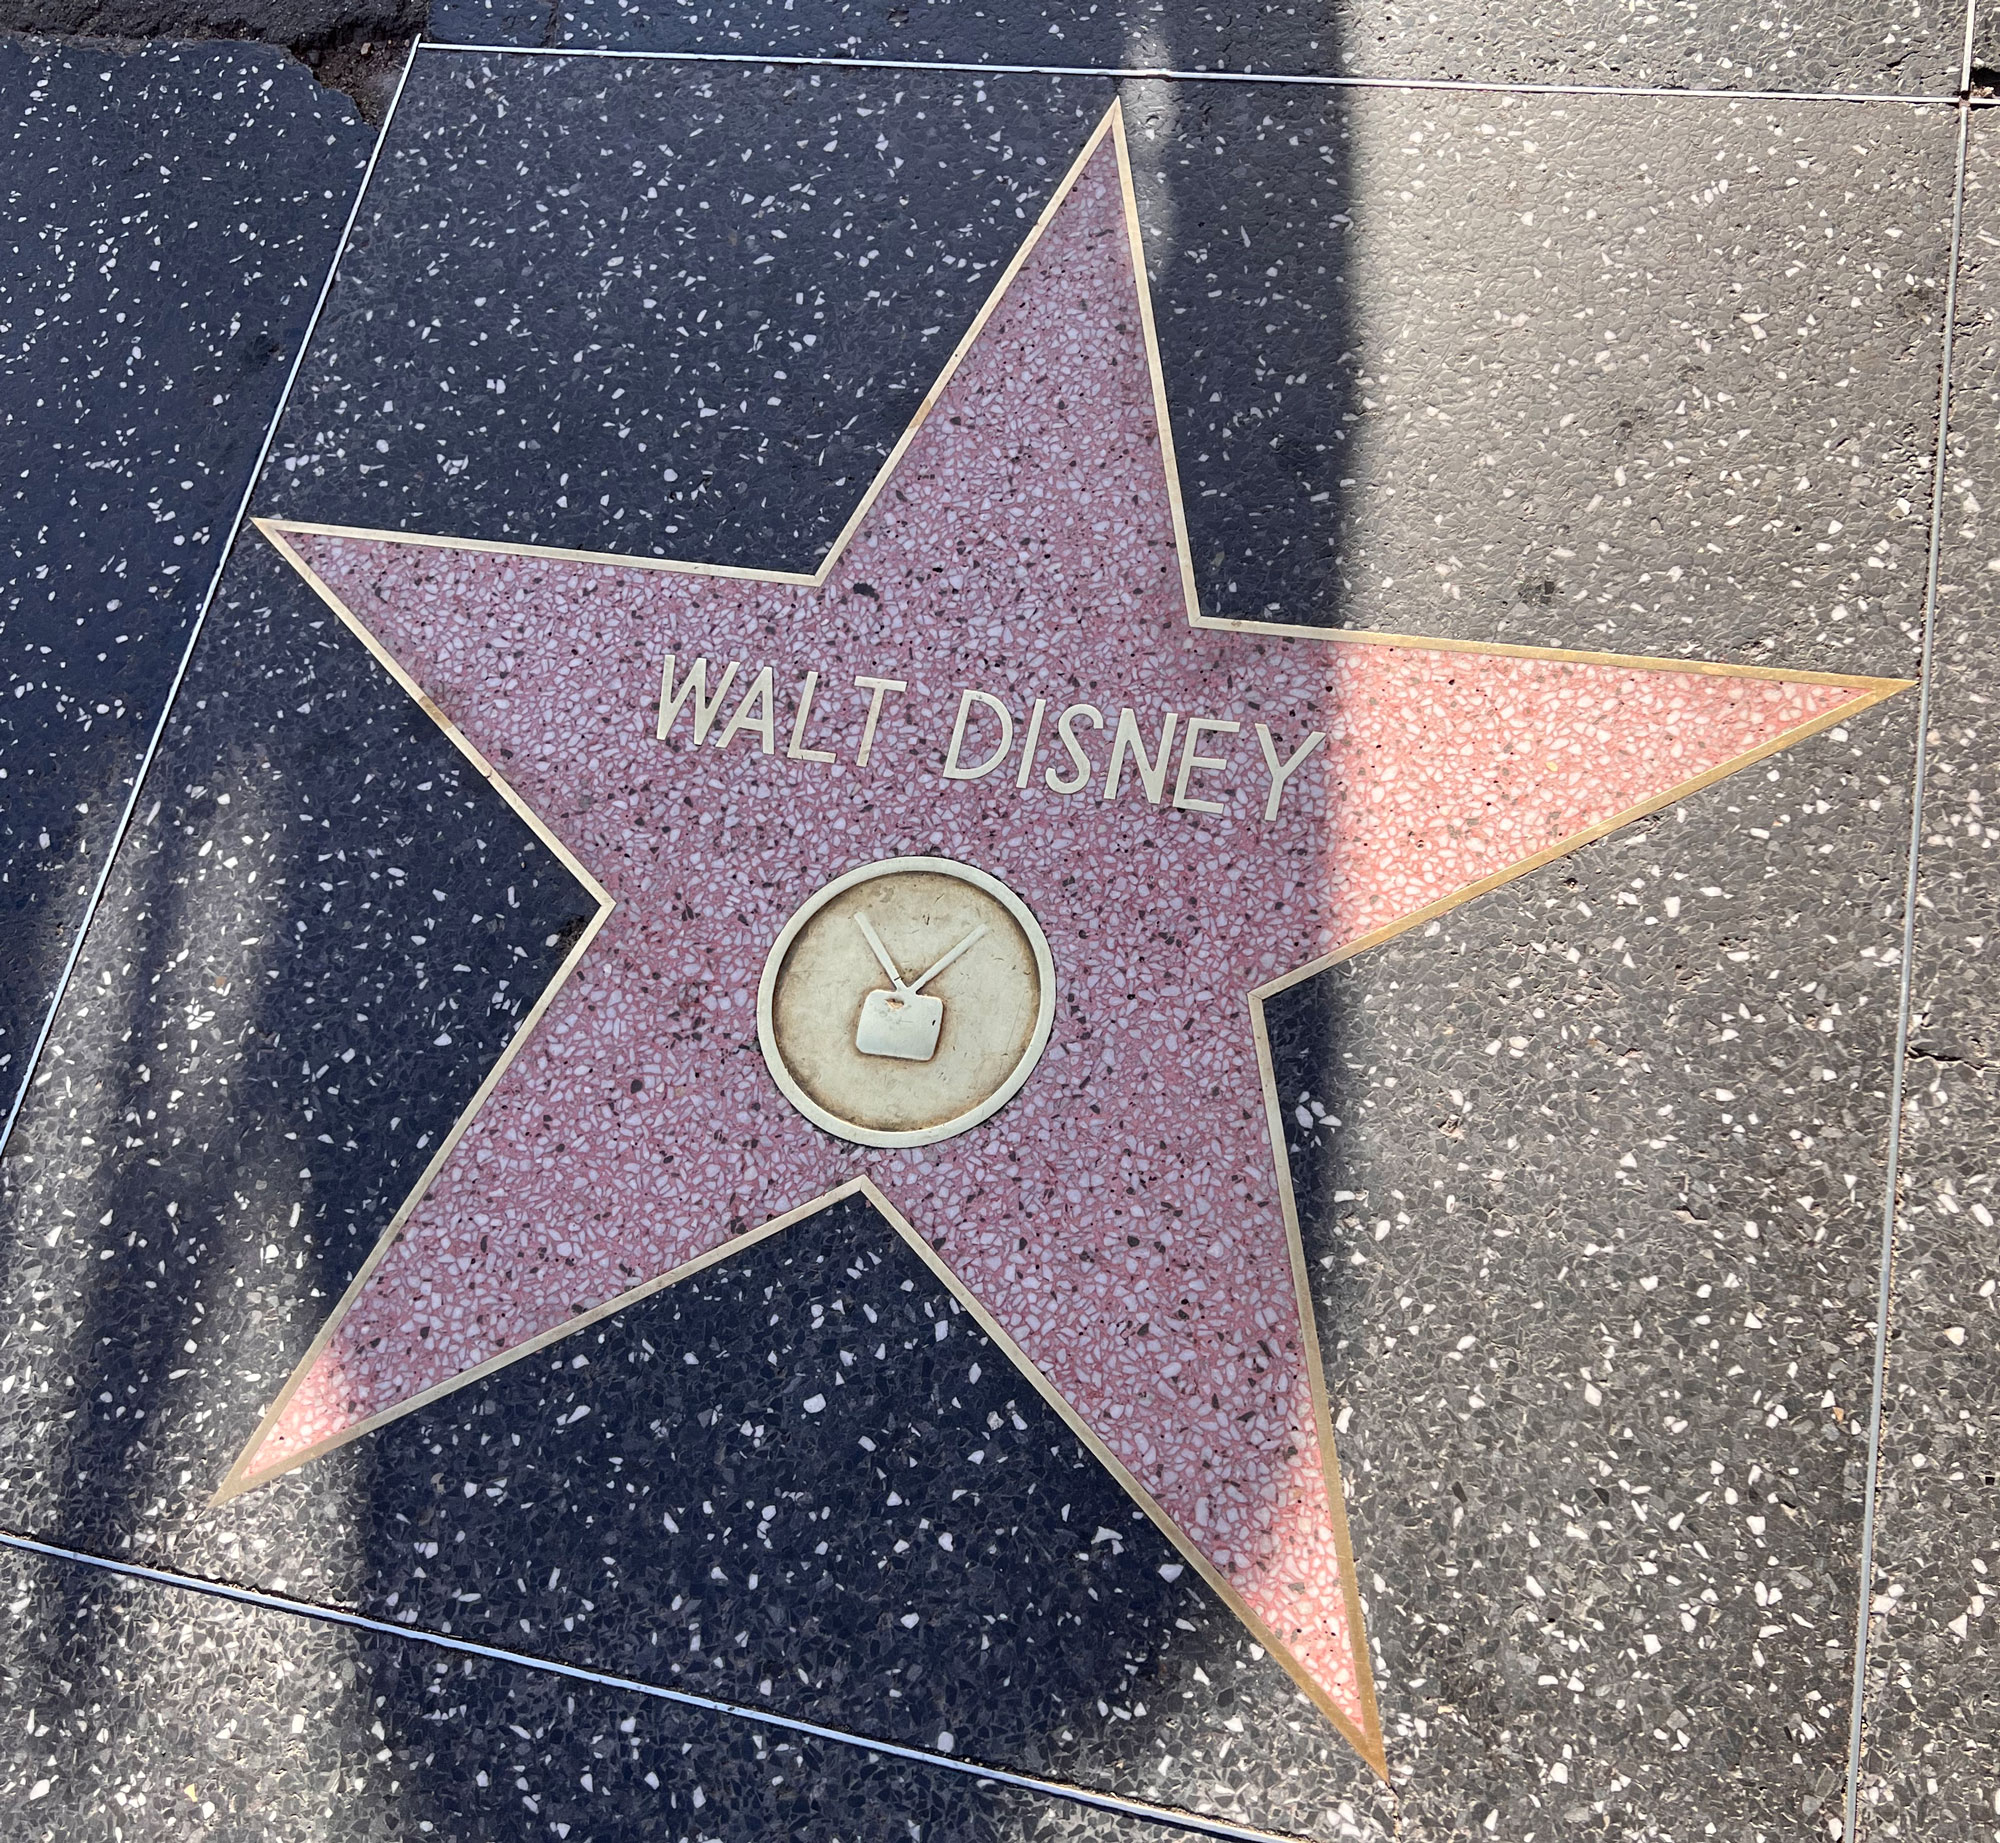 Walt Disney's Star on Hollywood Blvd.